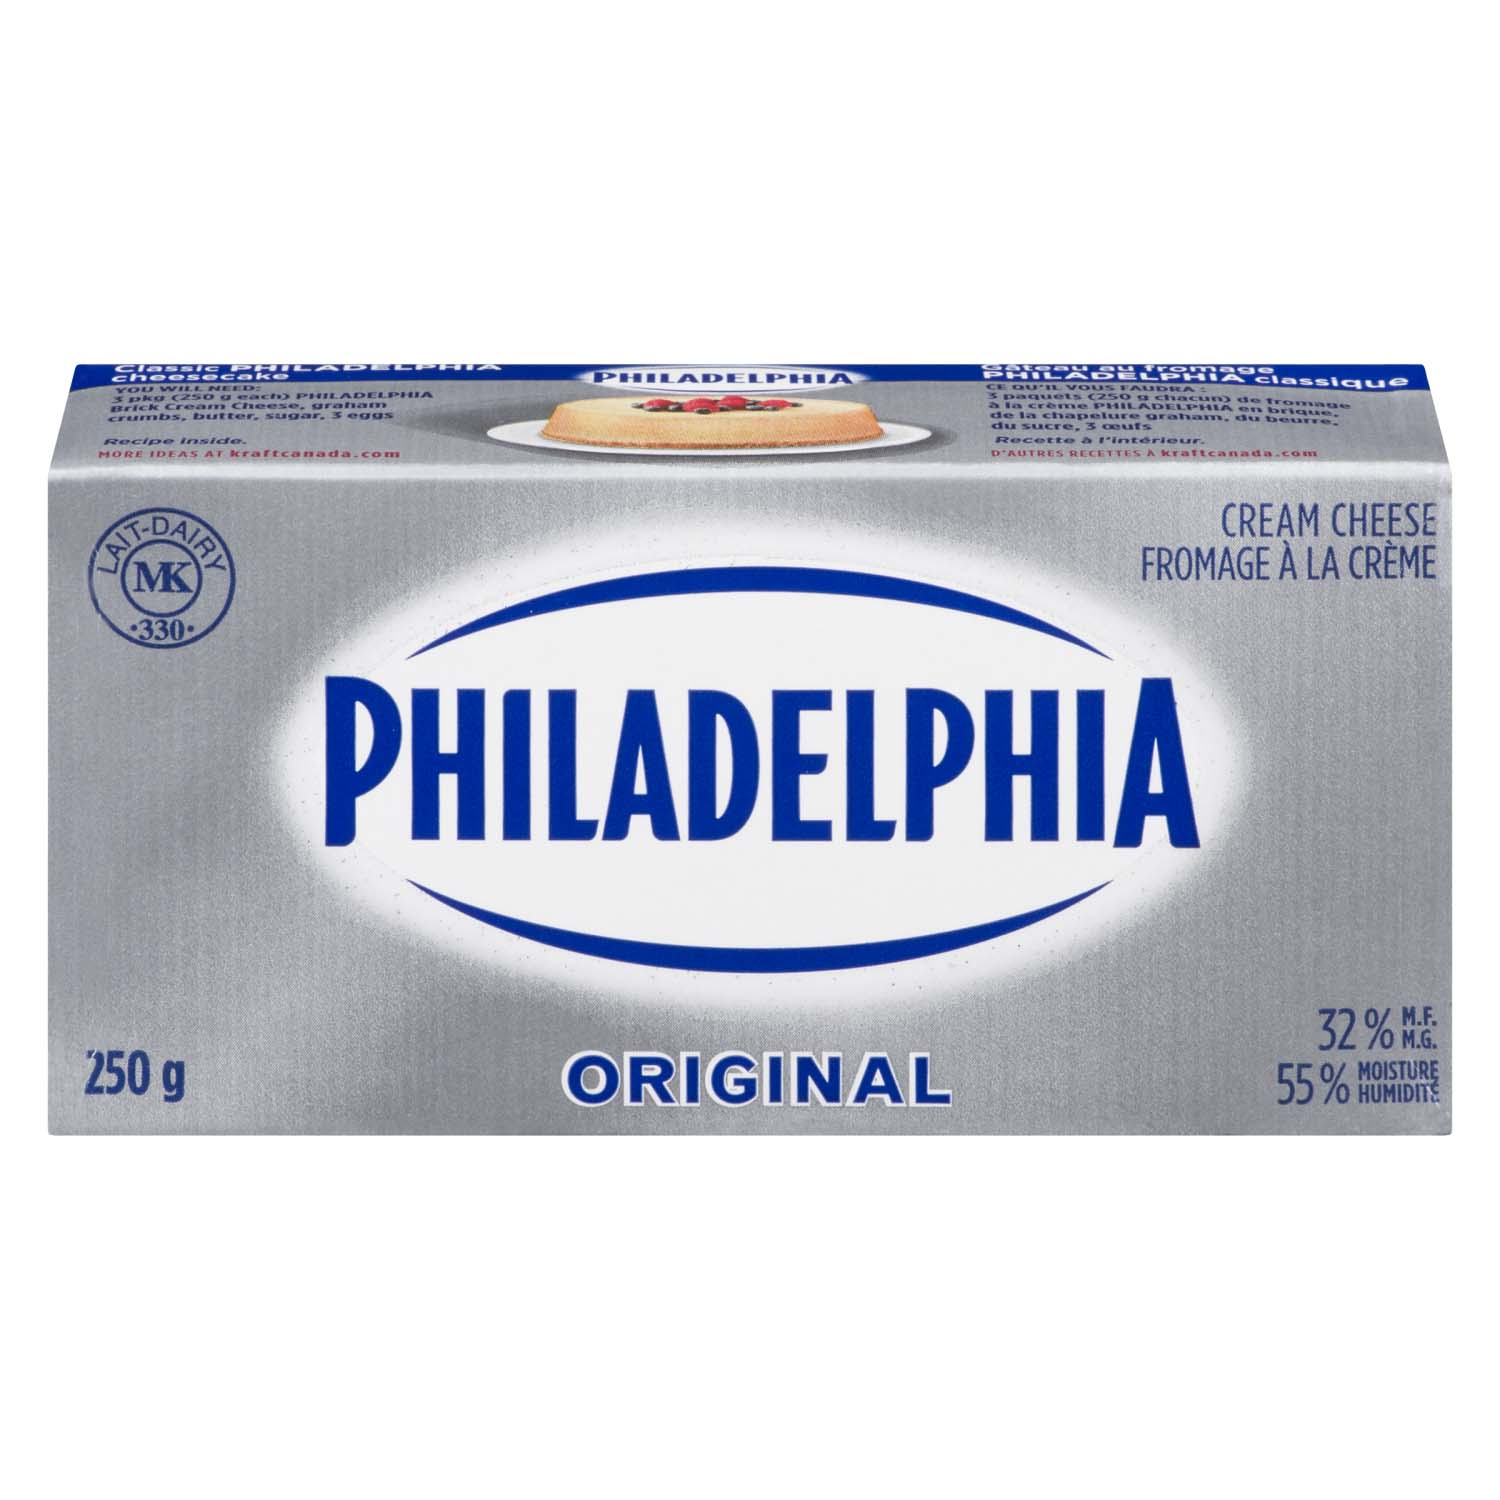 Philadelphia Cream Cheese Original 32 M.F. 250 g Powell's Supermarkets